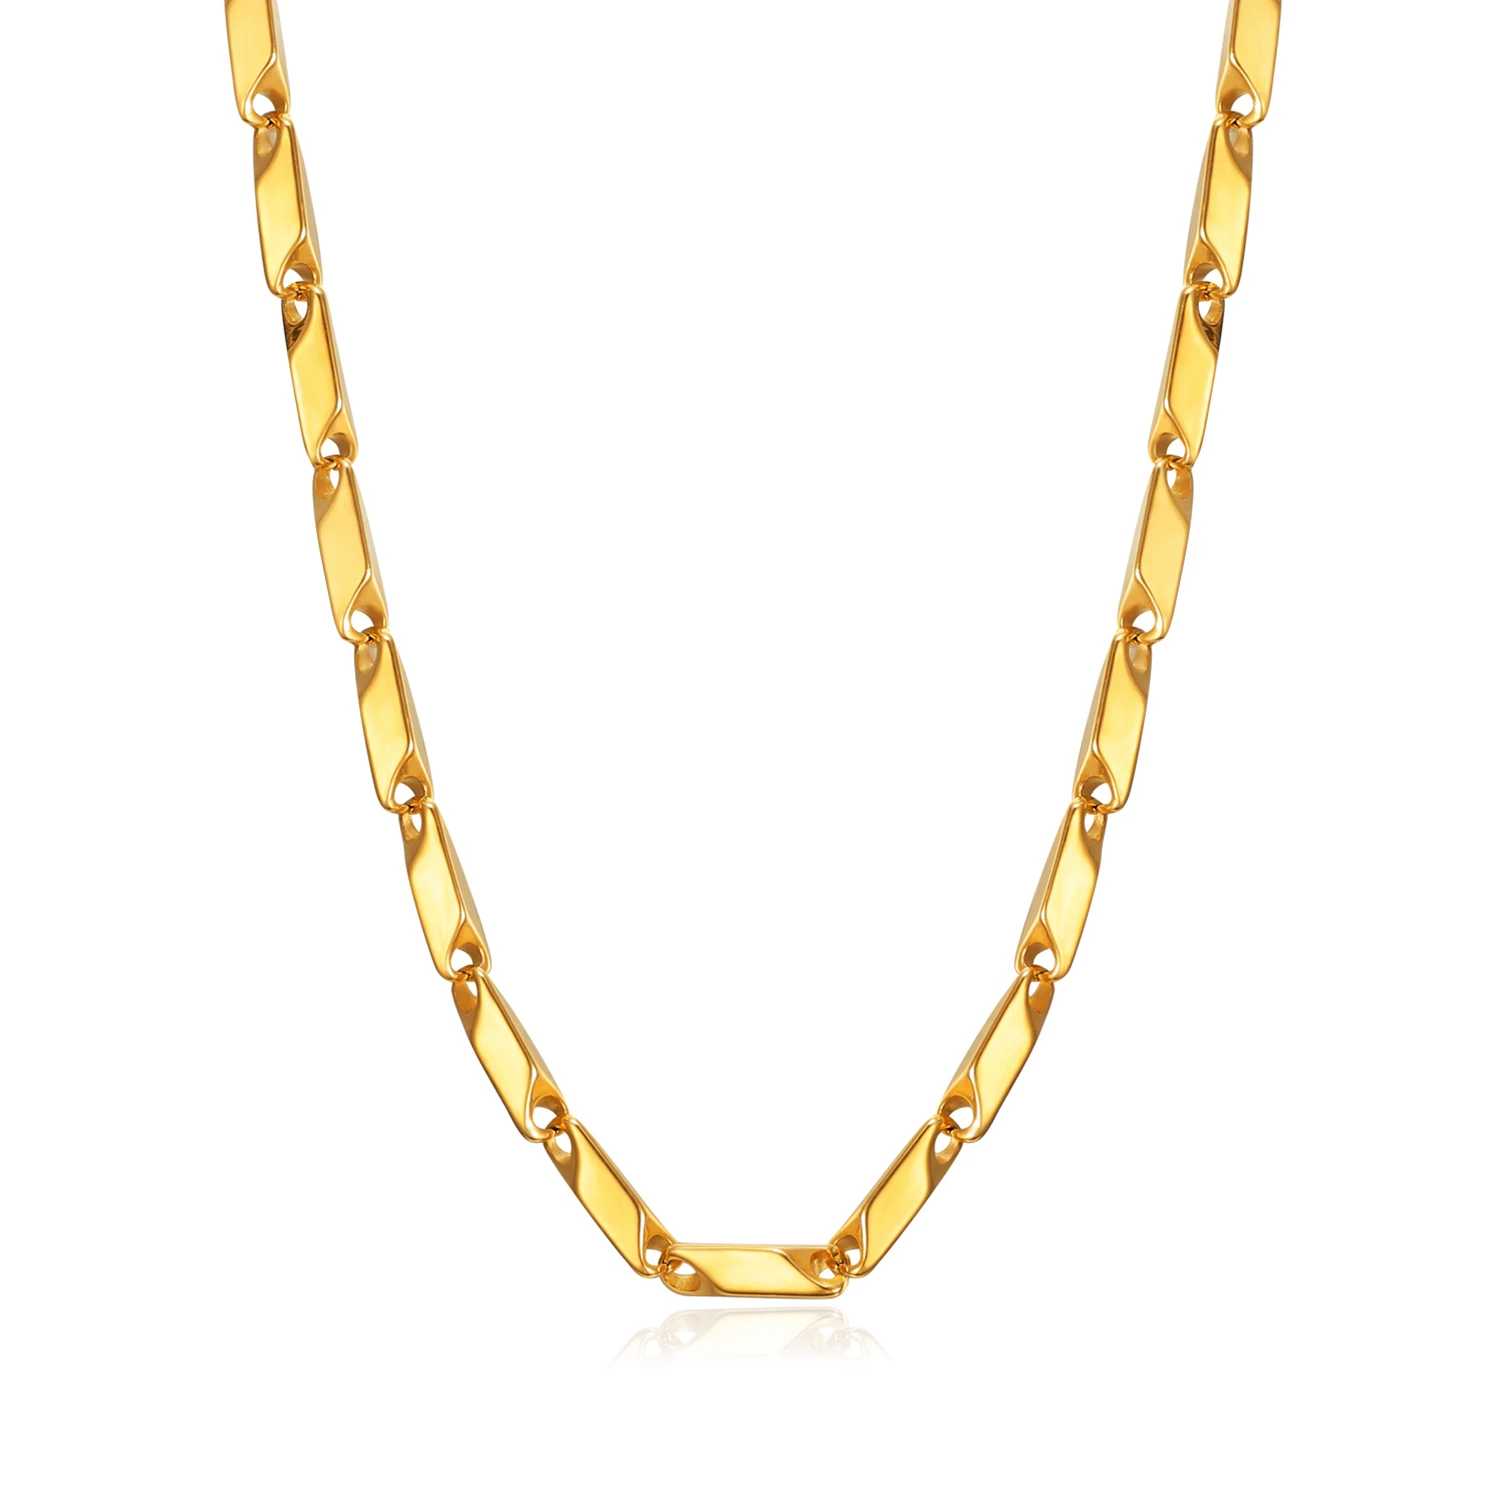 Купи 2021 Creative Chain Necklace for Men Women, Basic Punk Stainless Steel Link Chain Chokers, Vintage Gold Color Collar Jewelry за 451 рублей в магазине AliExpress